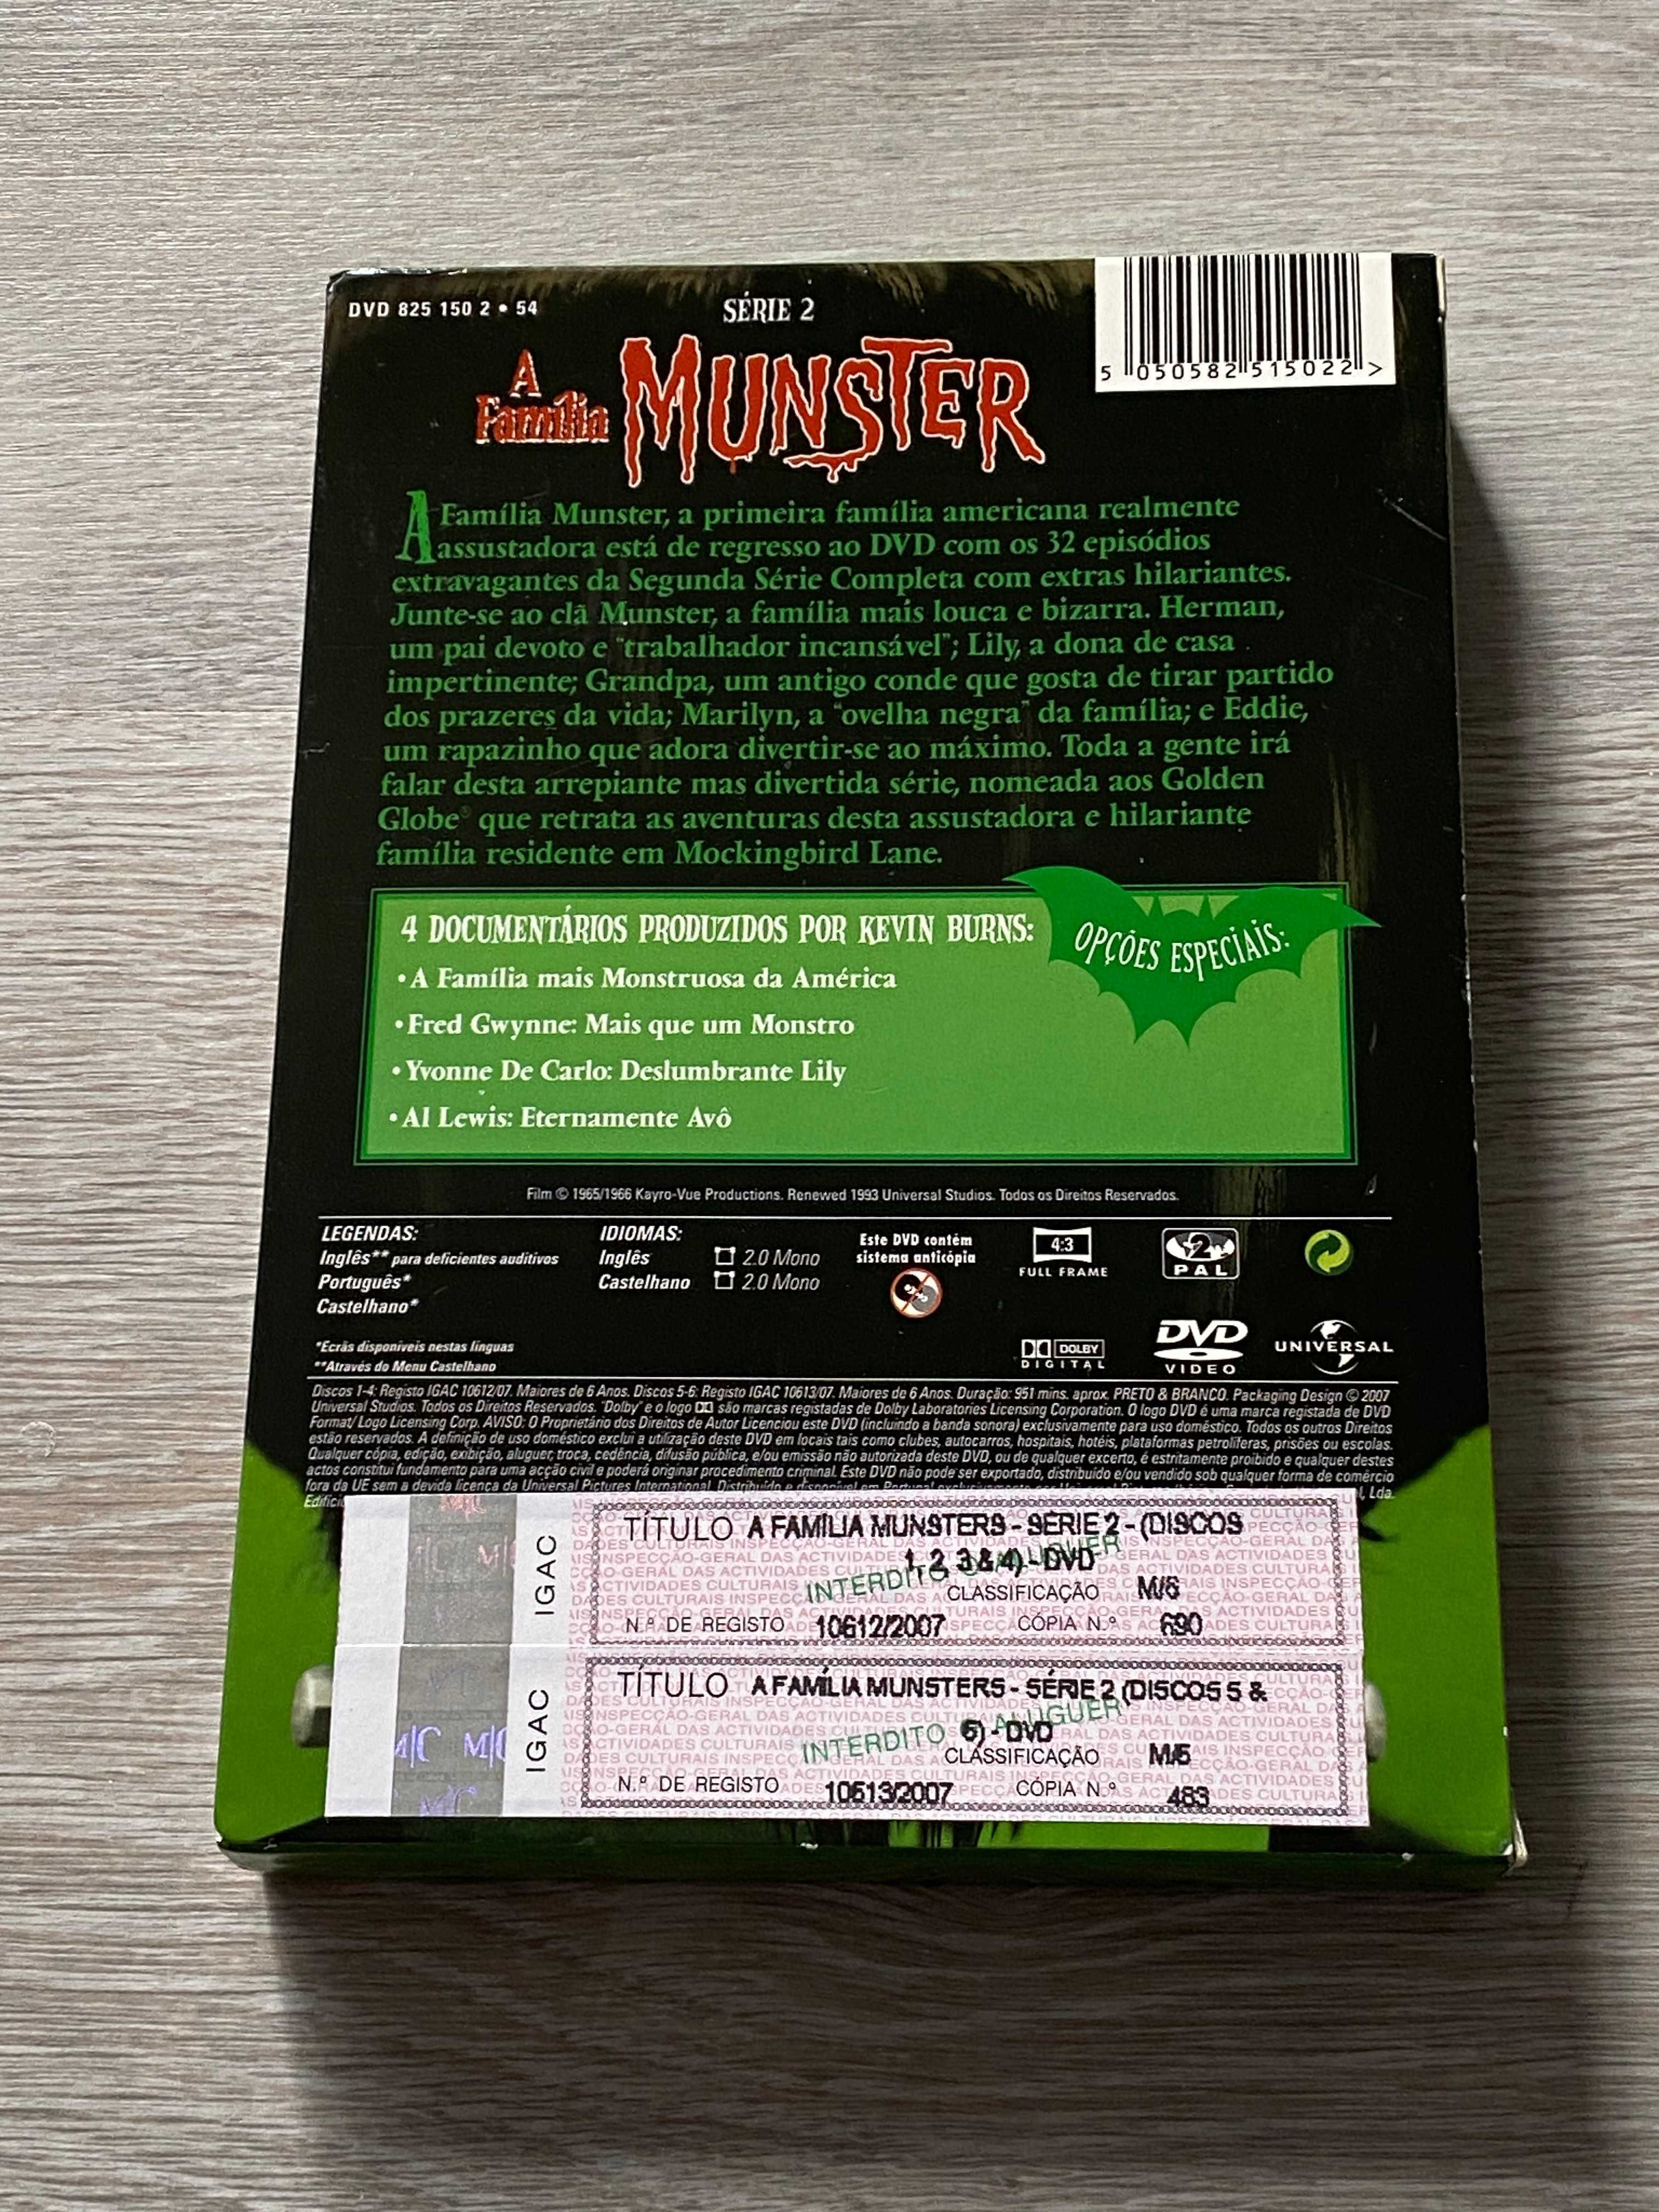 A Família Munster - série 2 (DVD)